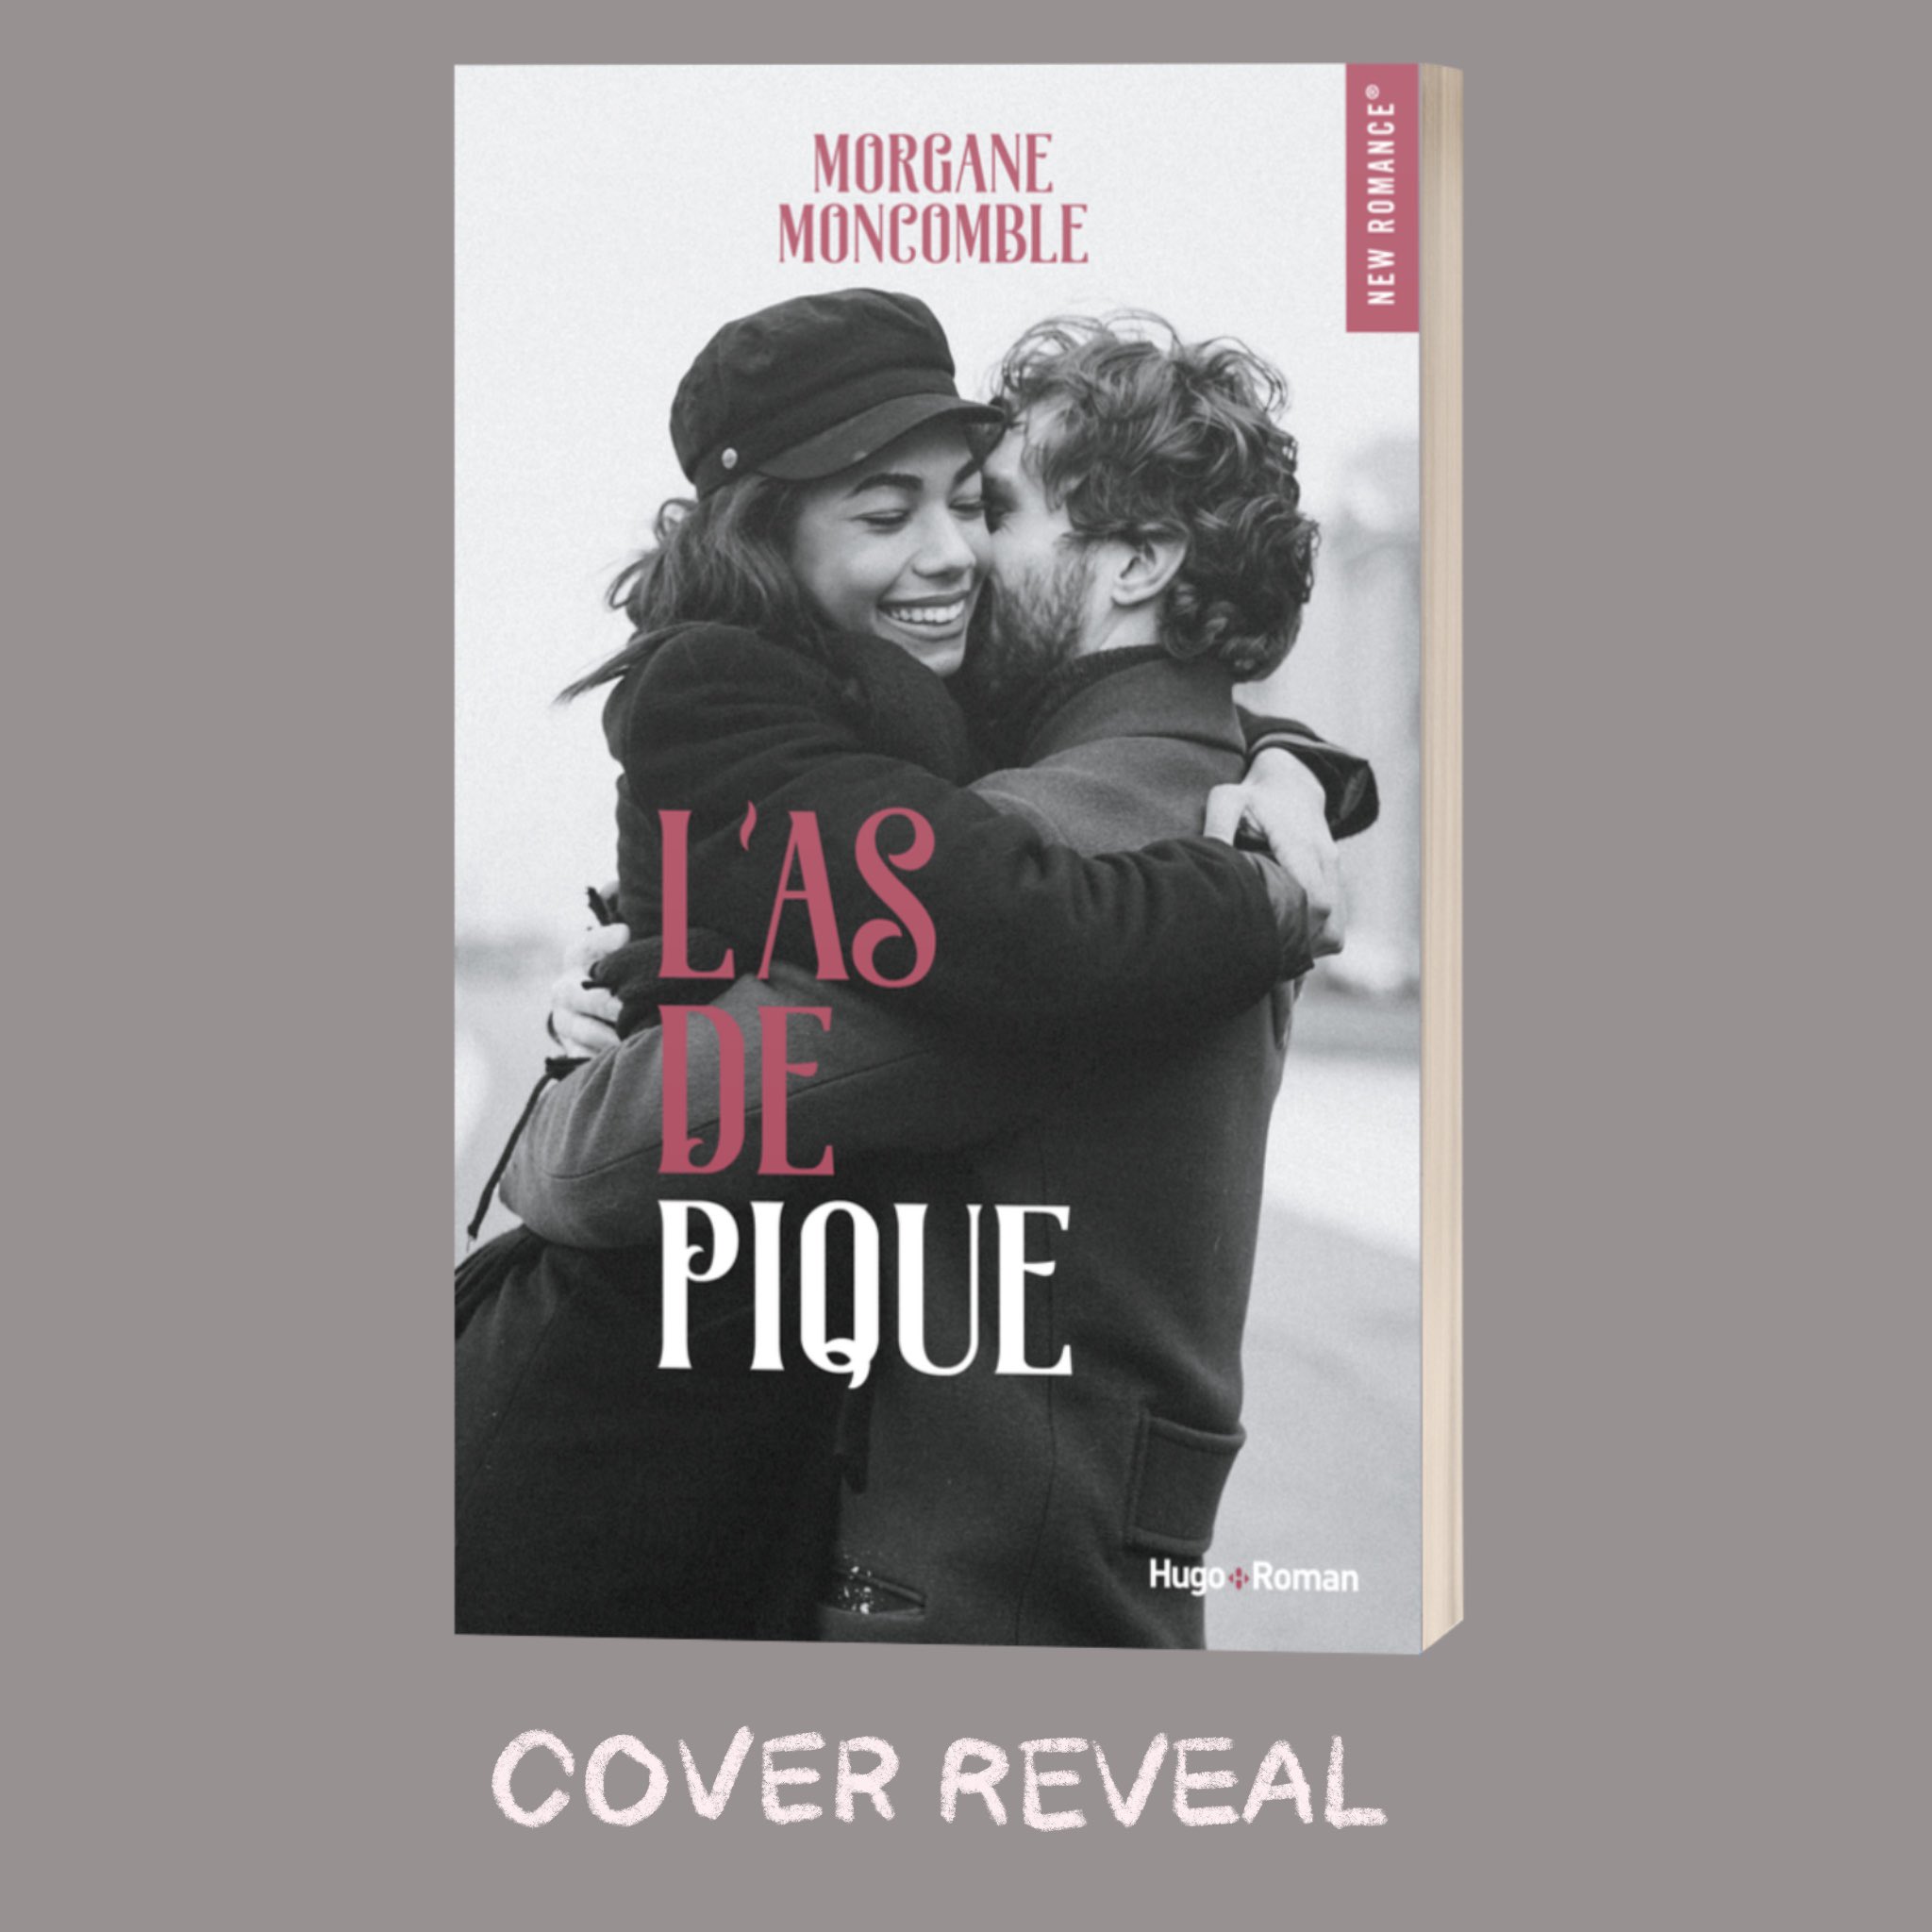 Morgane Moncomble on X: COVER REVEAL #lasdepique   / X